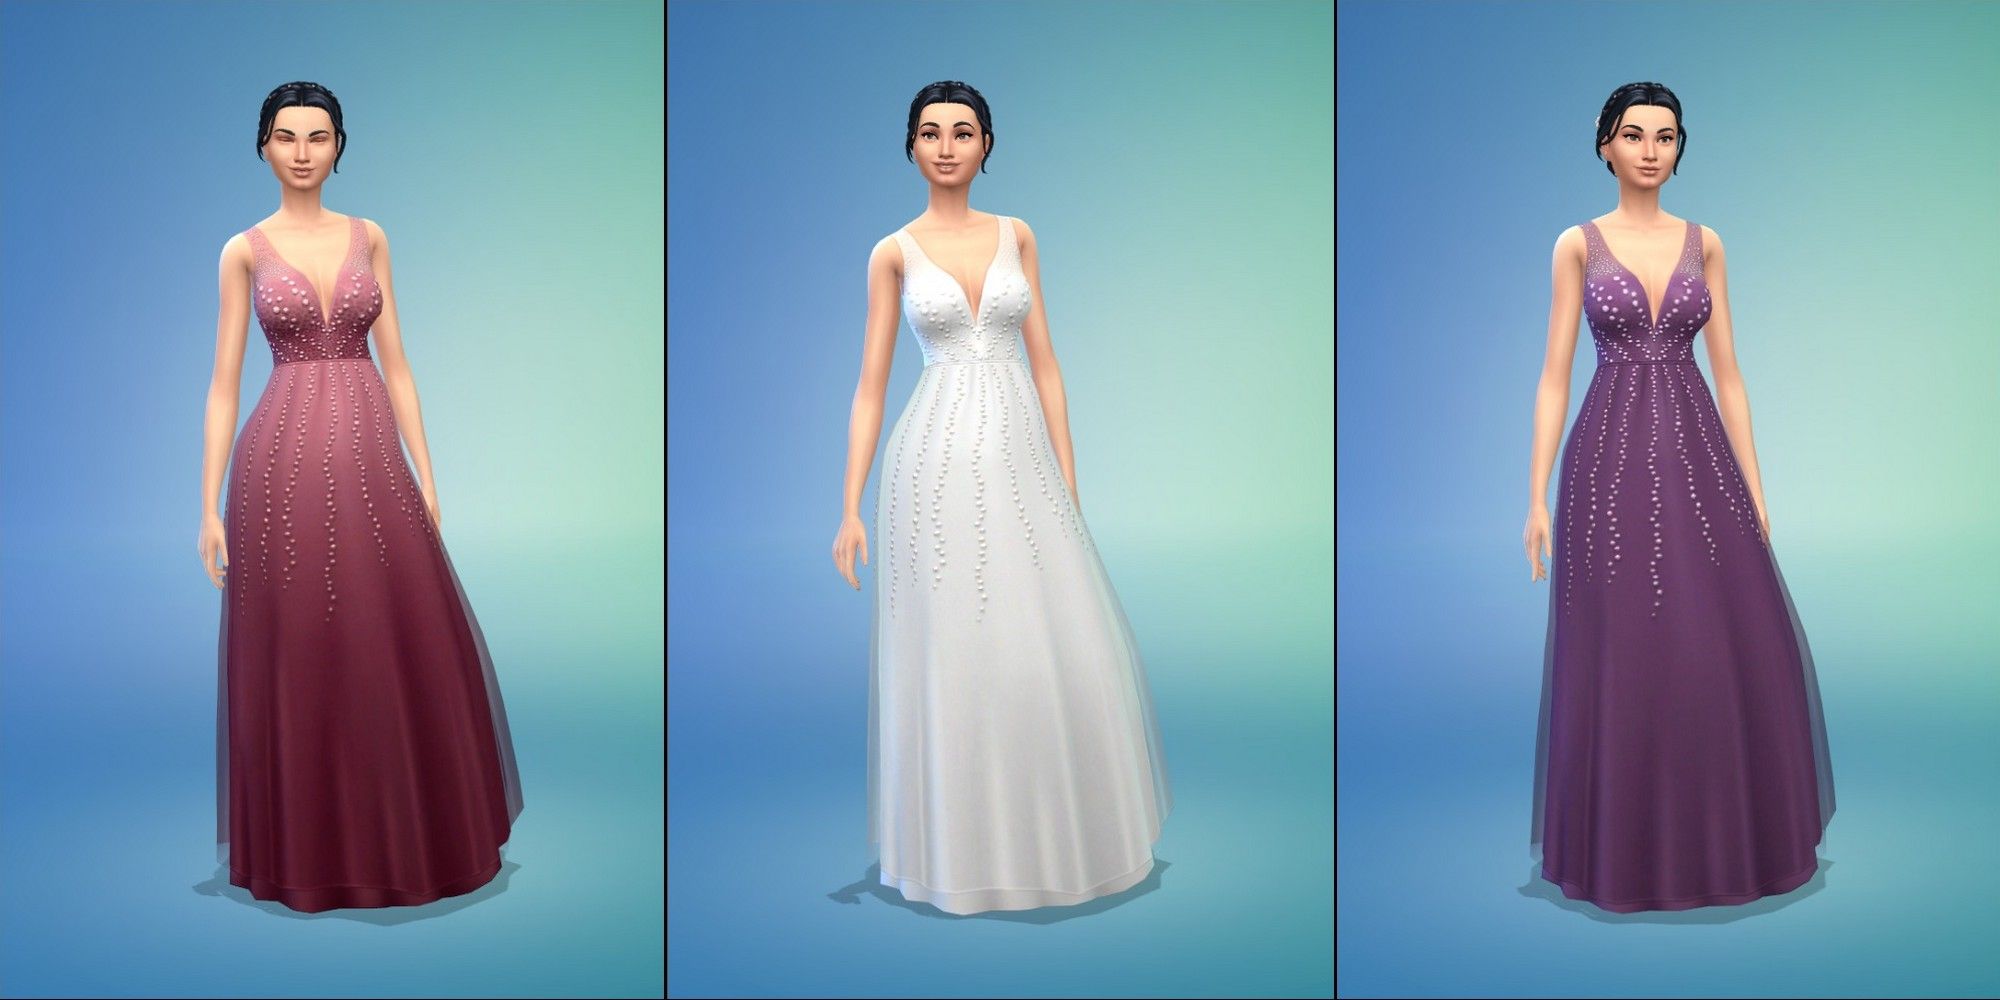 Sims 4 Wedding Dress Deep V No Sleeve Beads